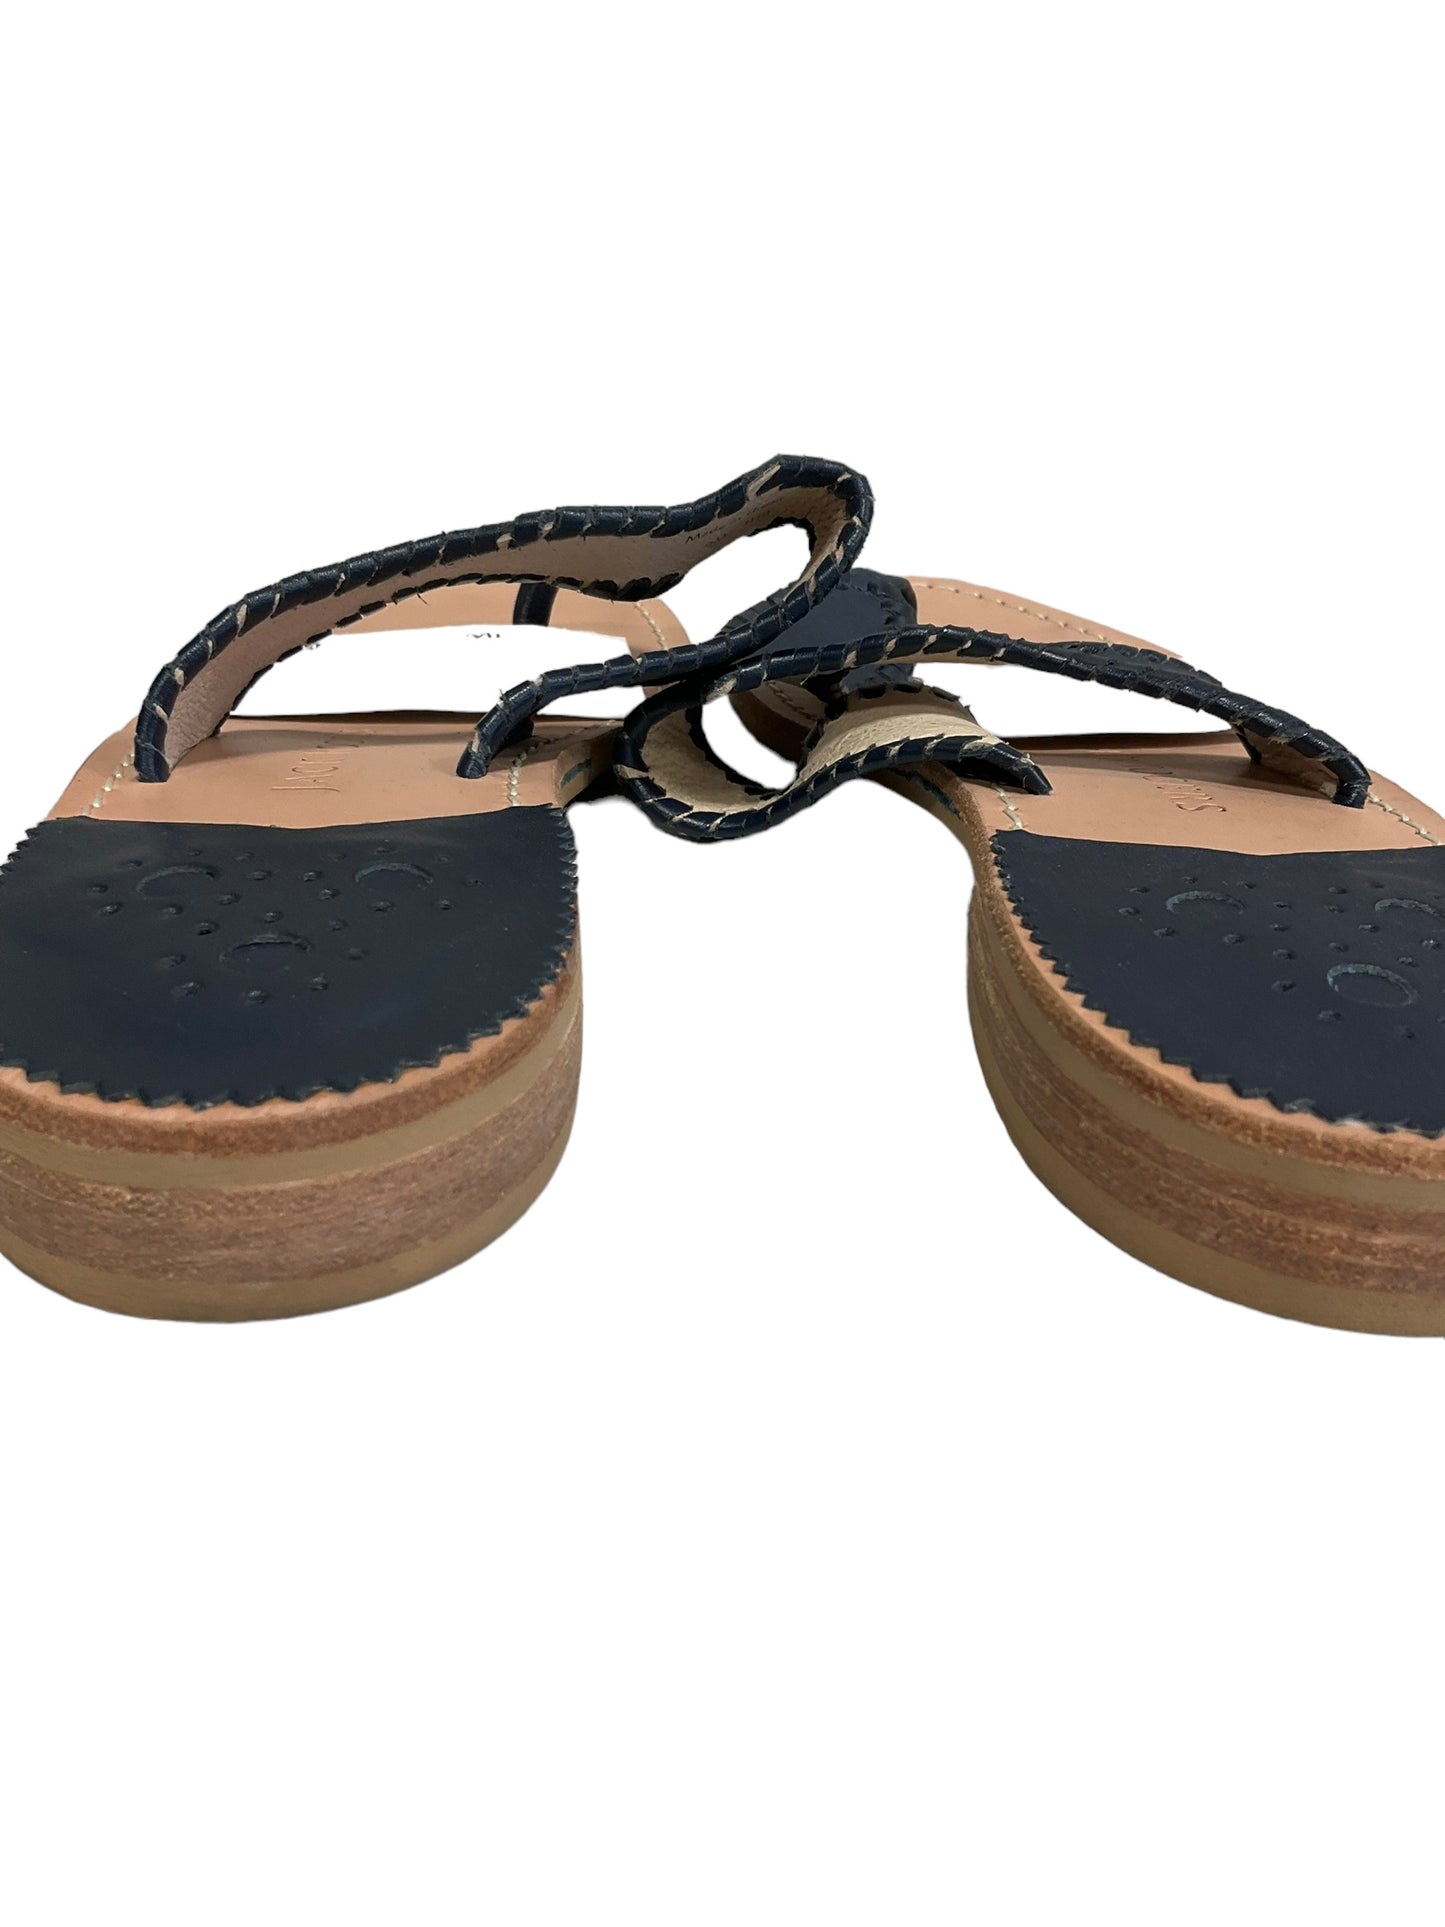 Sandals Flip Flops By Jack Rogers  Size: 9